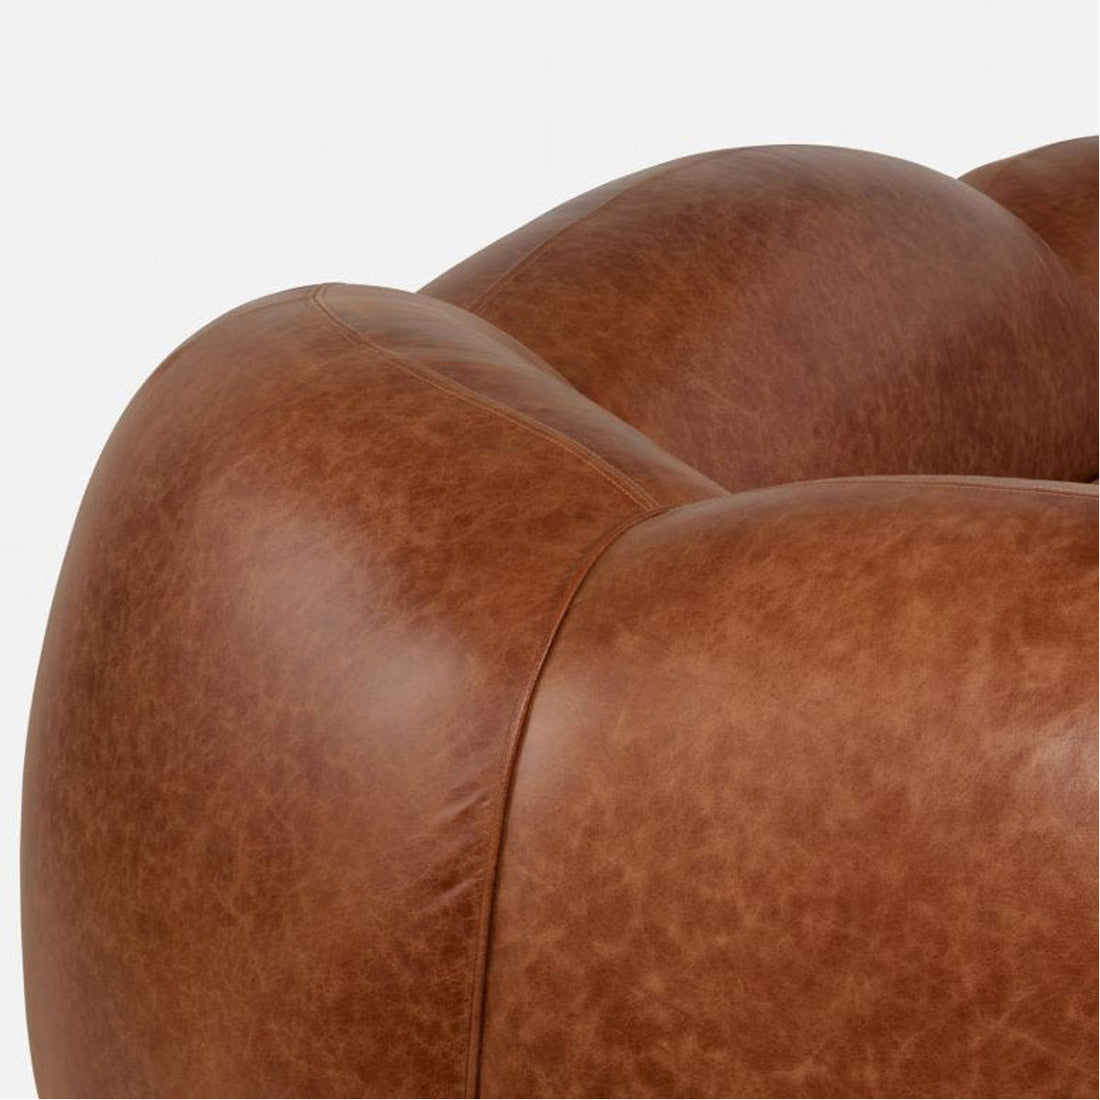 Made Goods Caldwell Scalloped Sofa in Rhone Full-Grain Leather